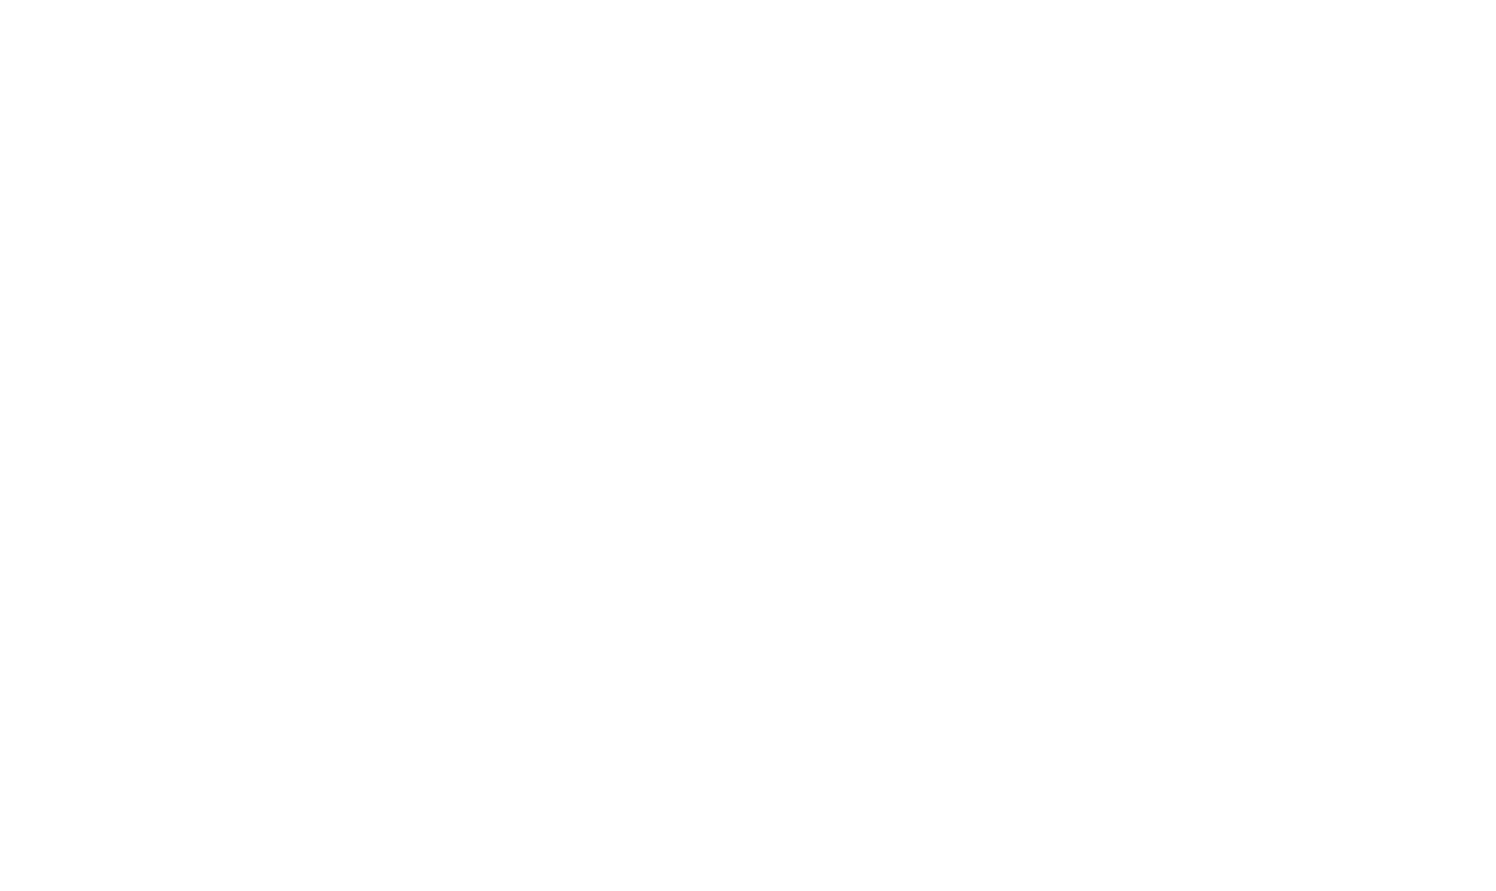 Black Tip Swim School